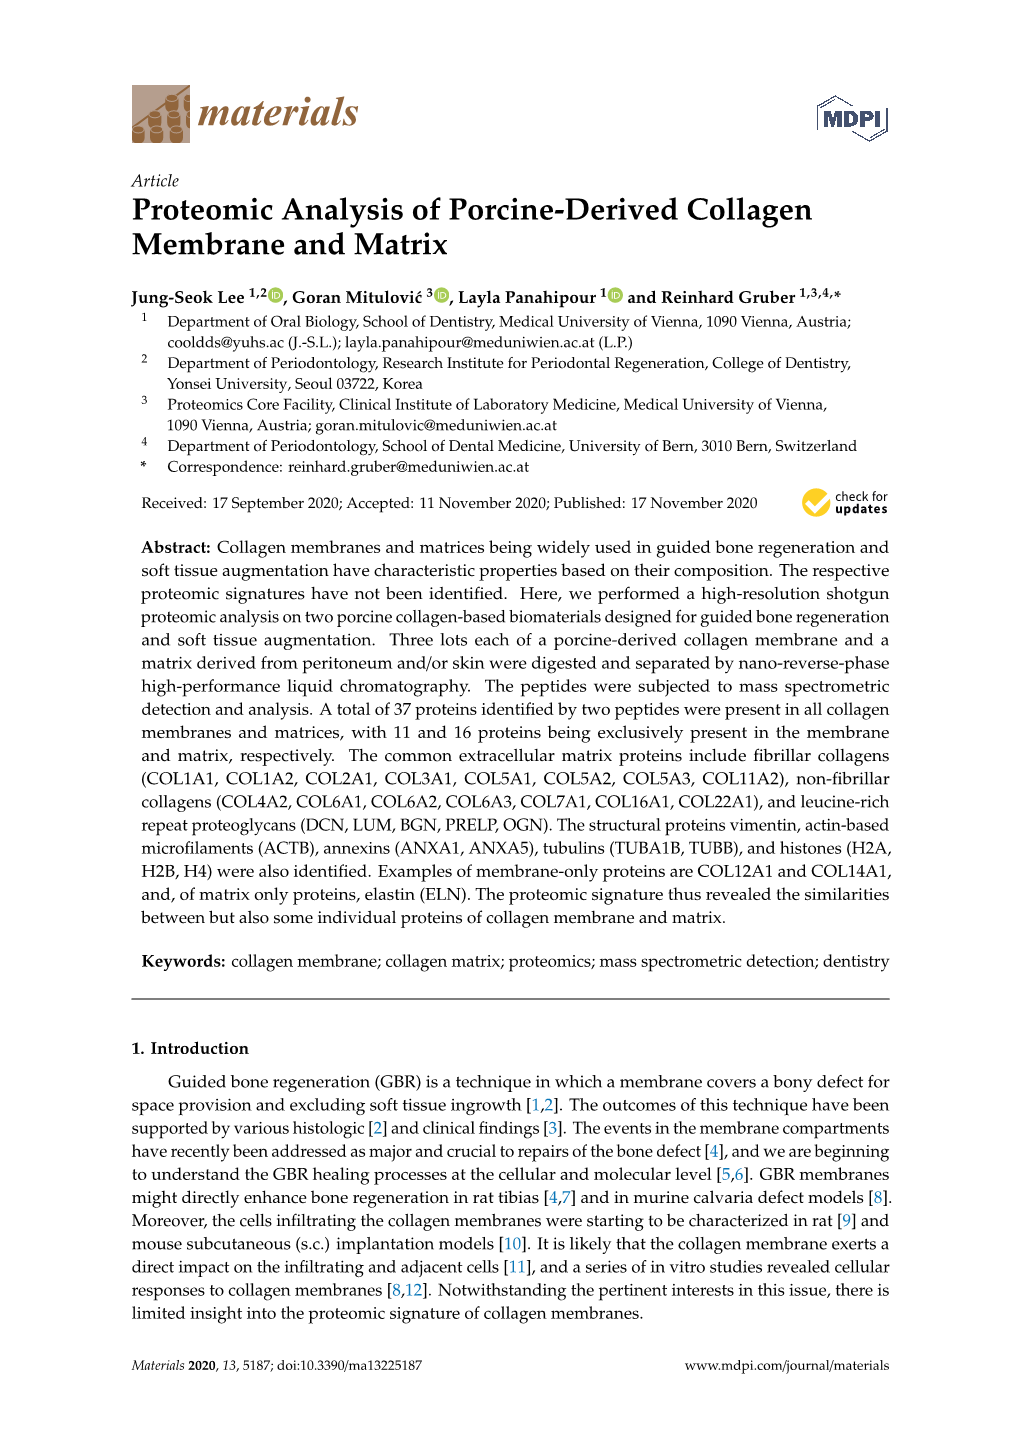 Proteomic Analysis of Porcine-Derived Collagen Membrane and Matrix